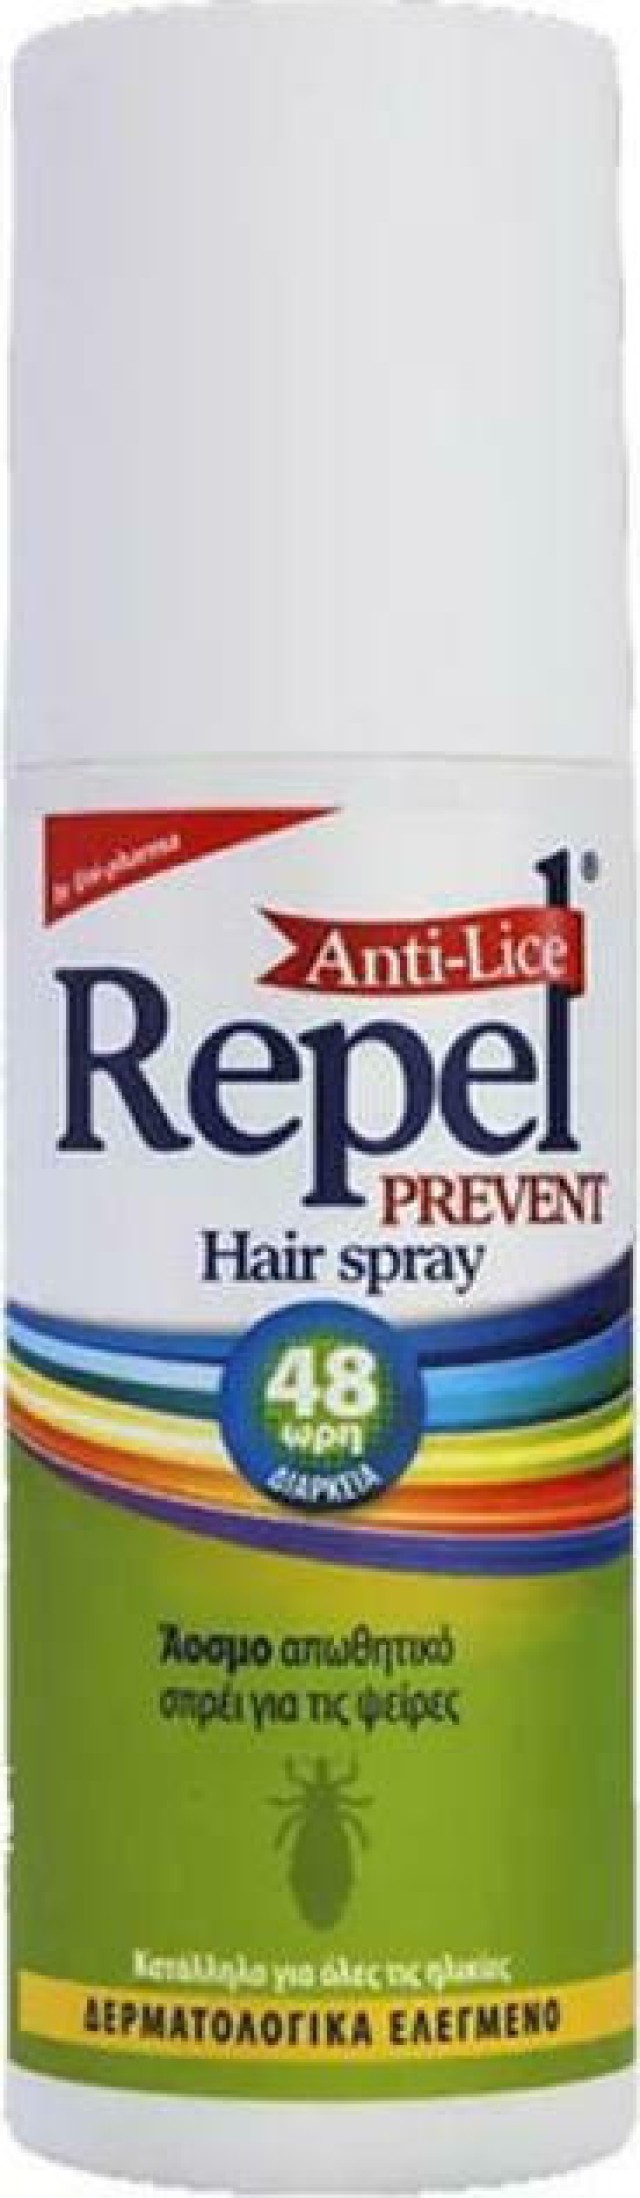 UniPharma Repel Anti-lice Prevent Hair Spray,  Άοσμο Απωθητικό Σπρέι για τις Ψείρες, 150ml